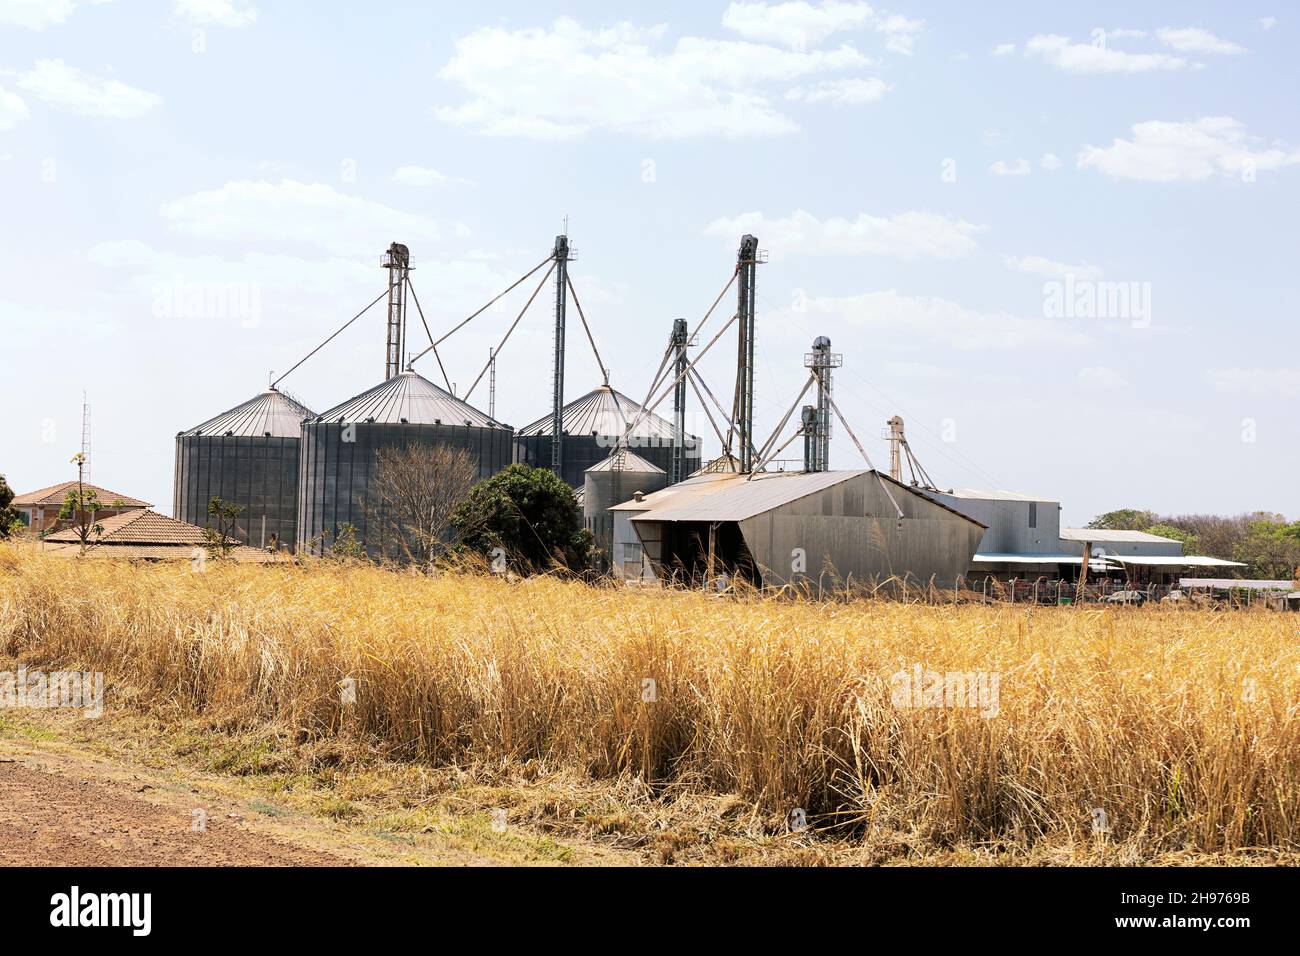 cerrado brazil dry vegetation silo industry agriculture Stock Photo